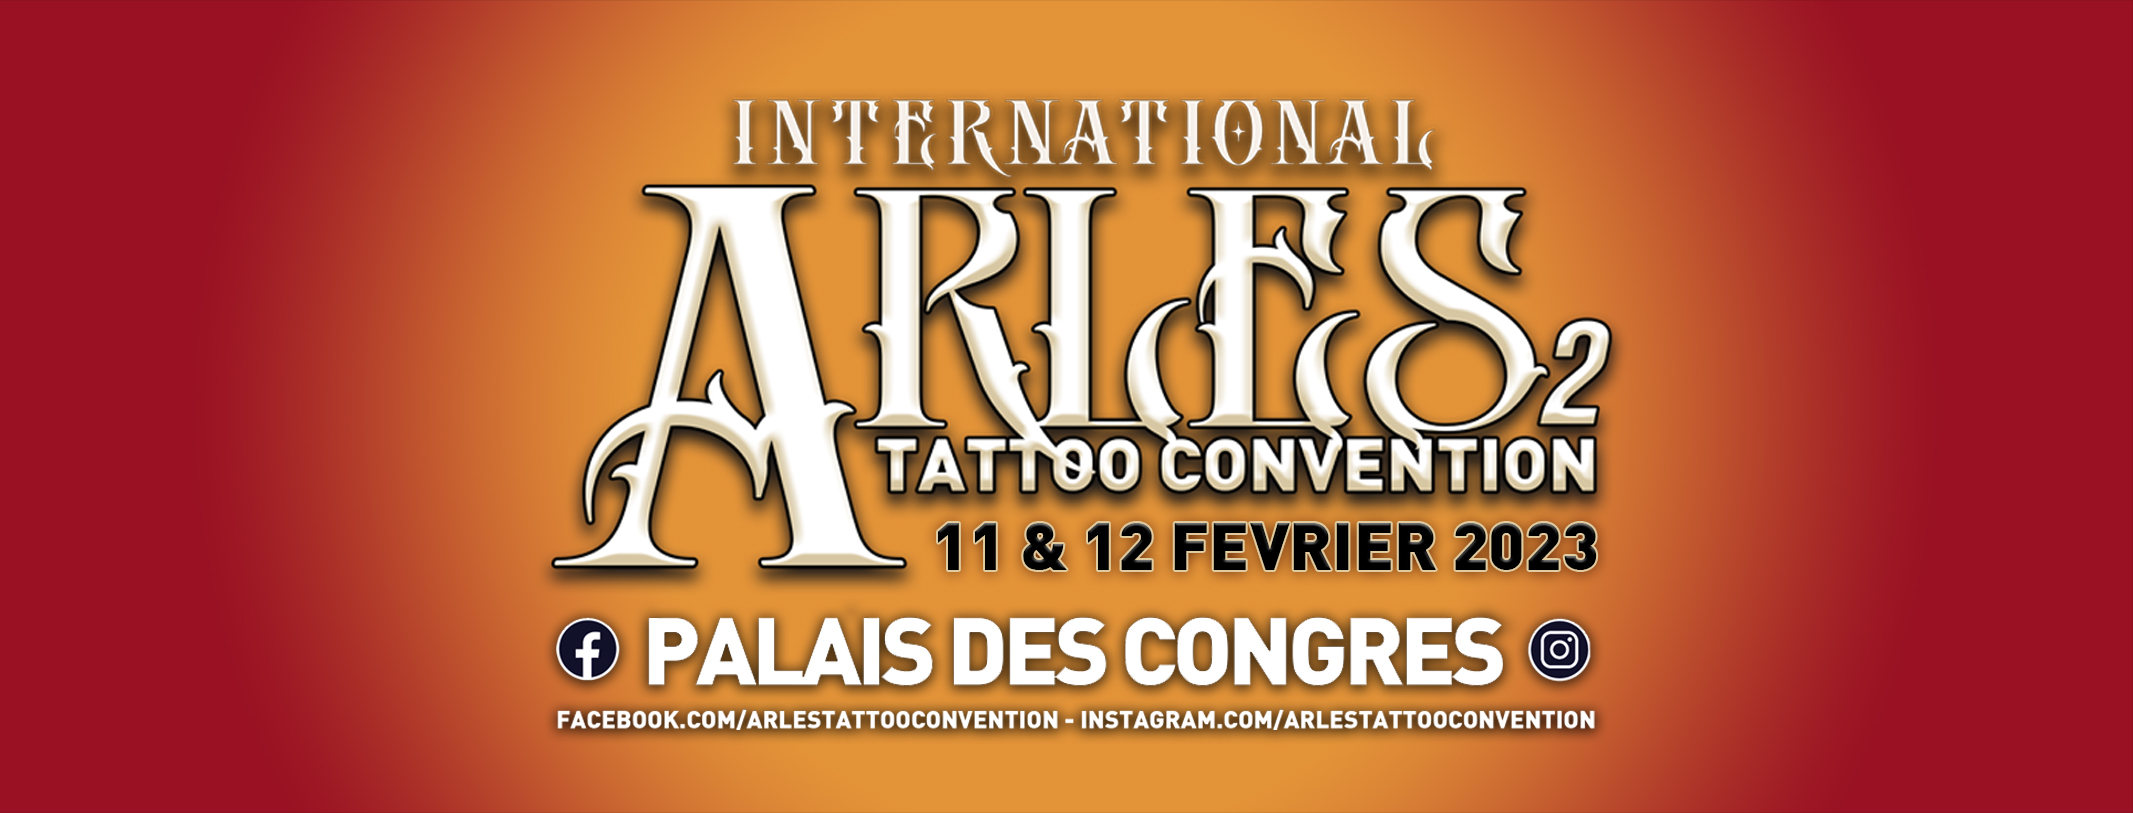 International Arles Tatoo Convention au Palais des Congrès